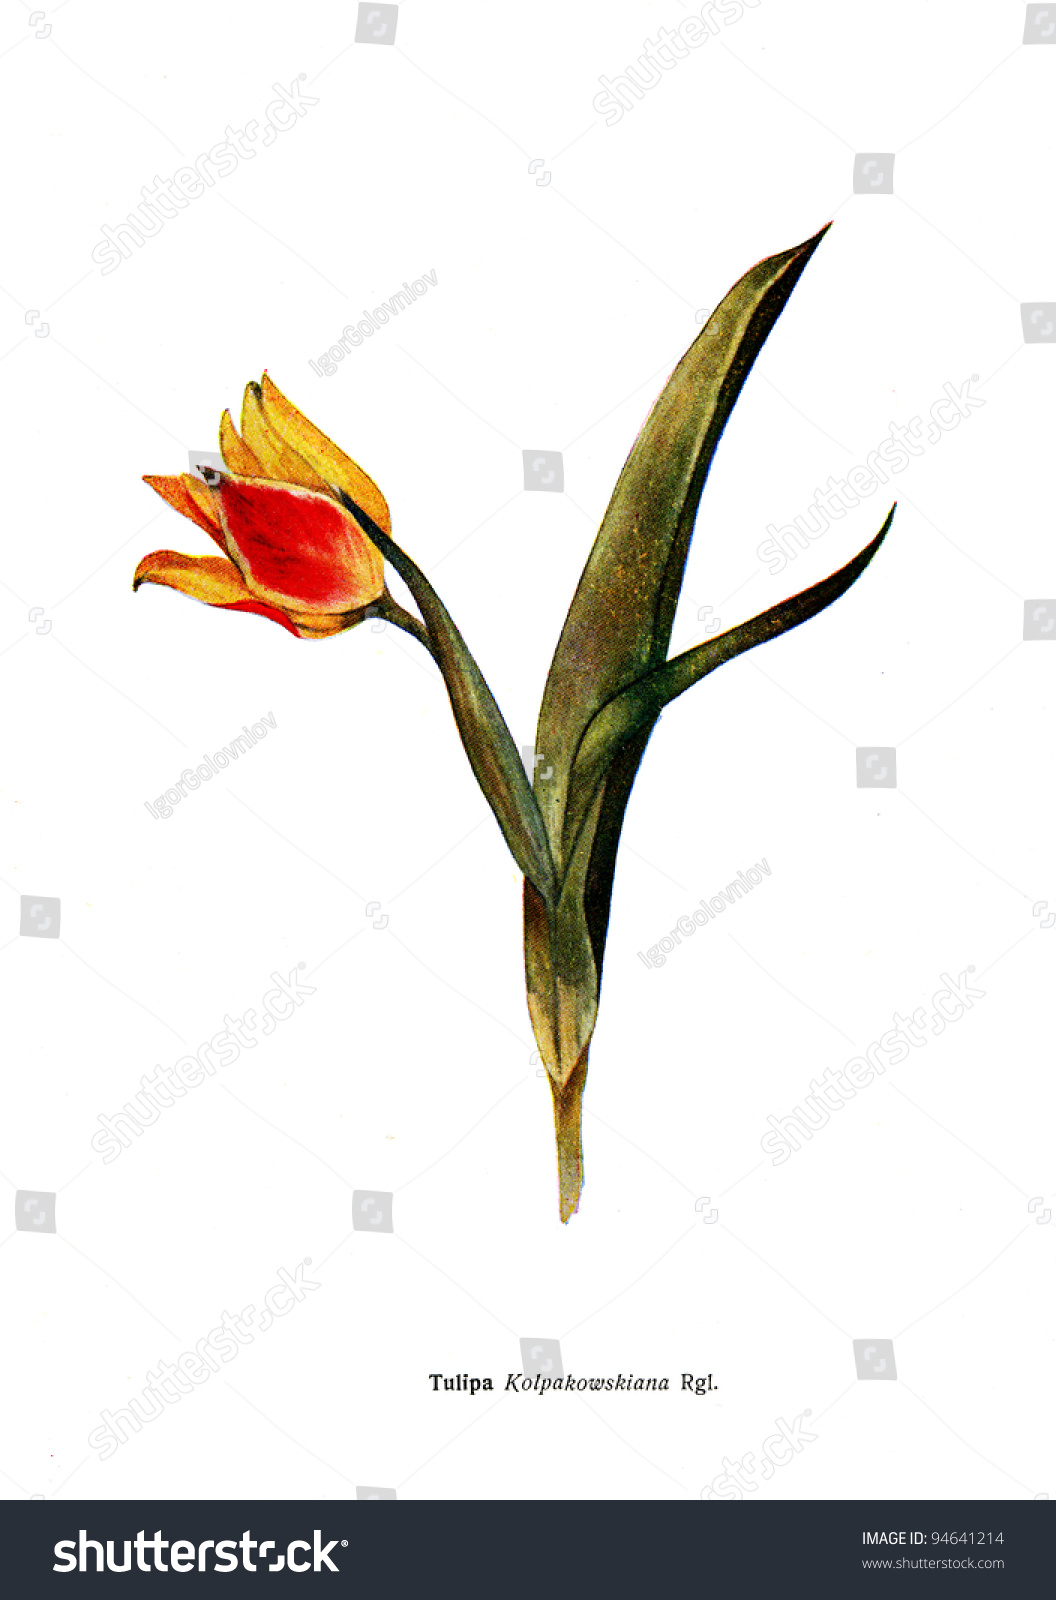 Tulipa Kolpakowskiana Rgl Illustration Book Species Stock Photo Edit Now 94641214